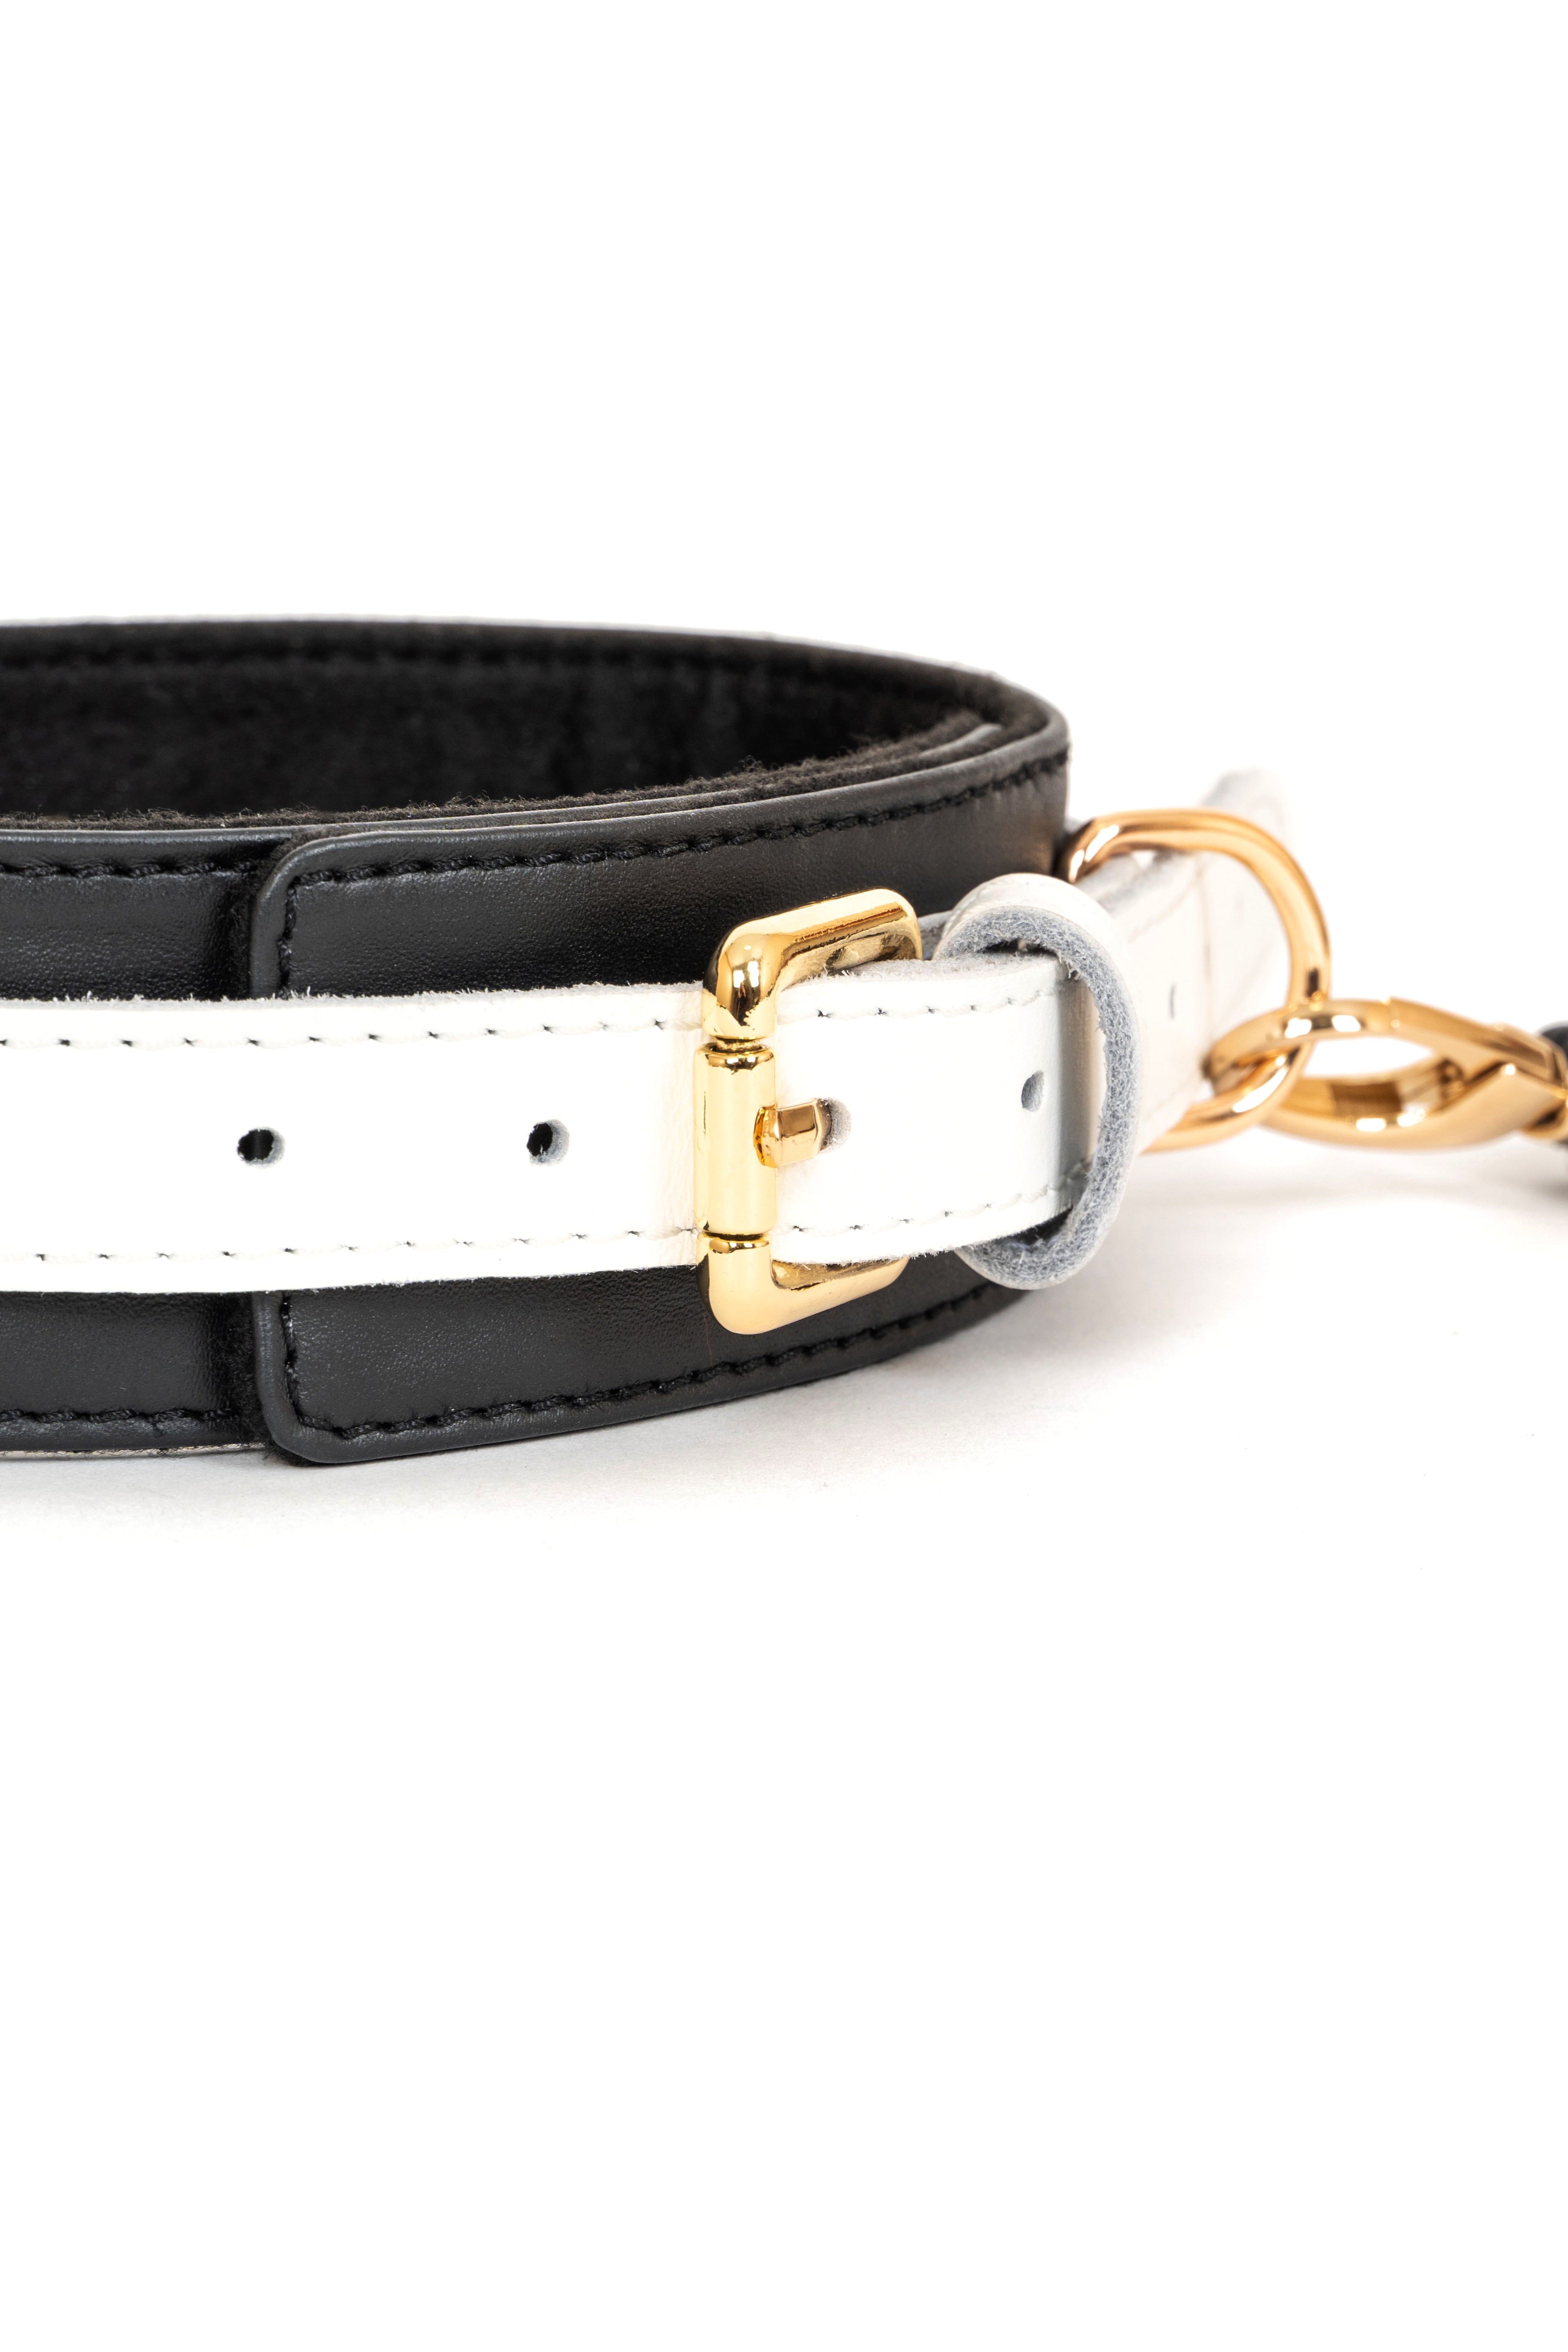 Black'n'White 6 in 1 Leather Harness Bondage Set